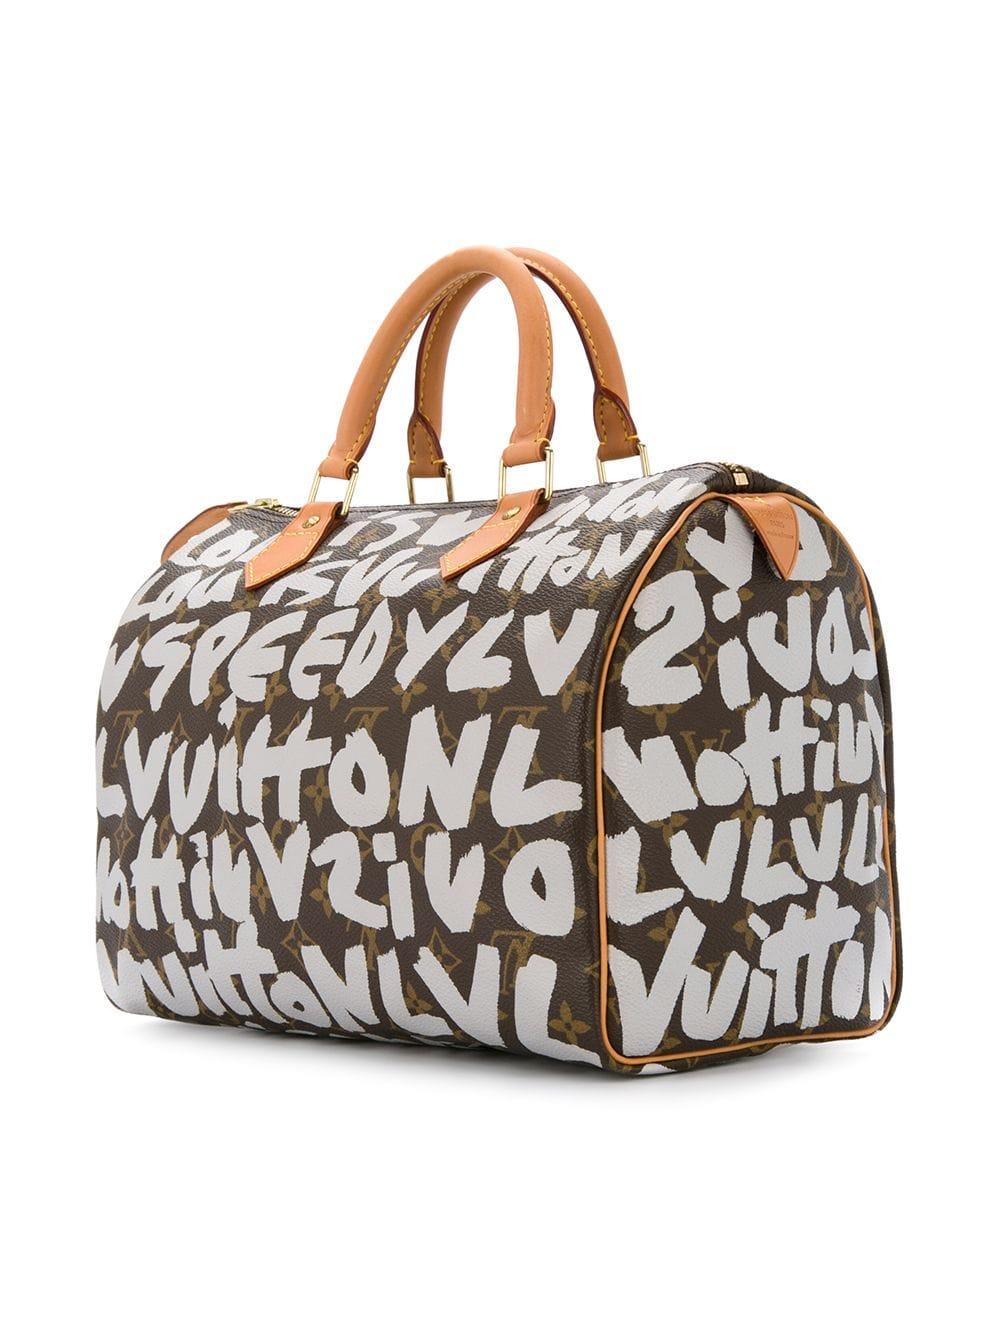 Louis Vuitton Vintage Speedy 30 Tote, $999, farfetch.com